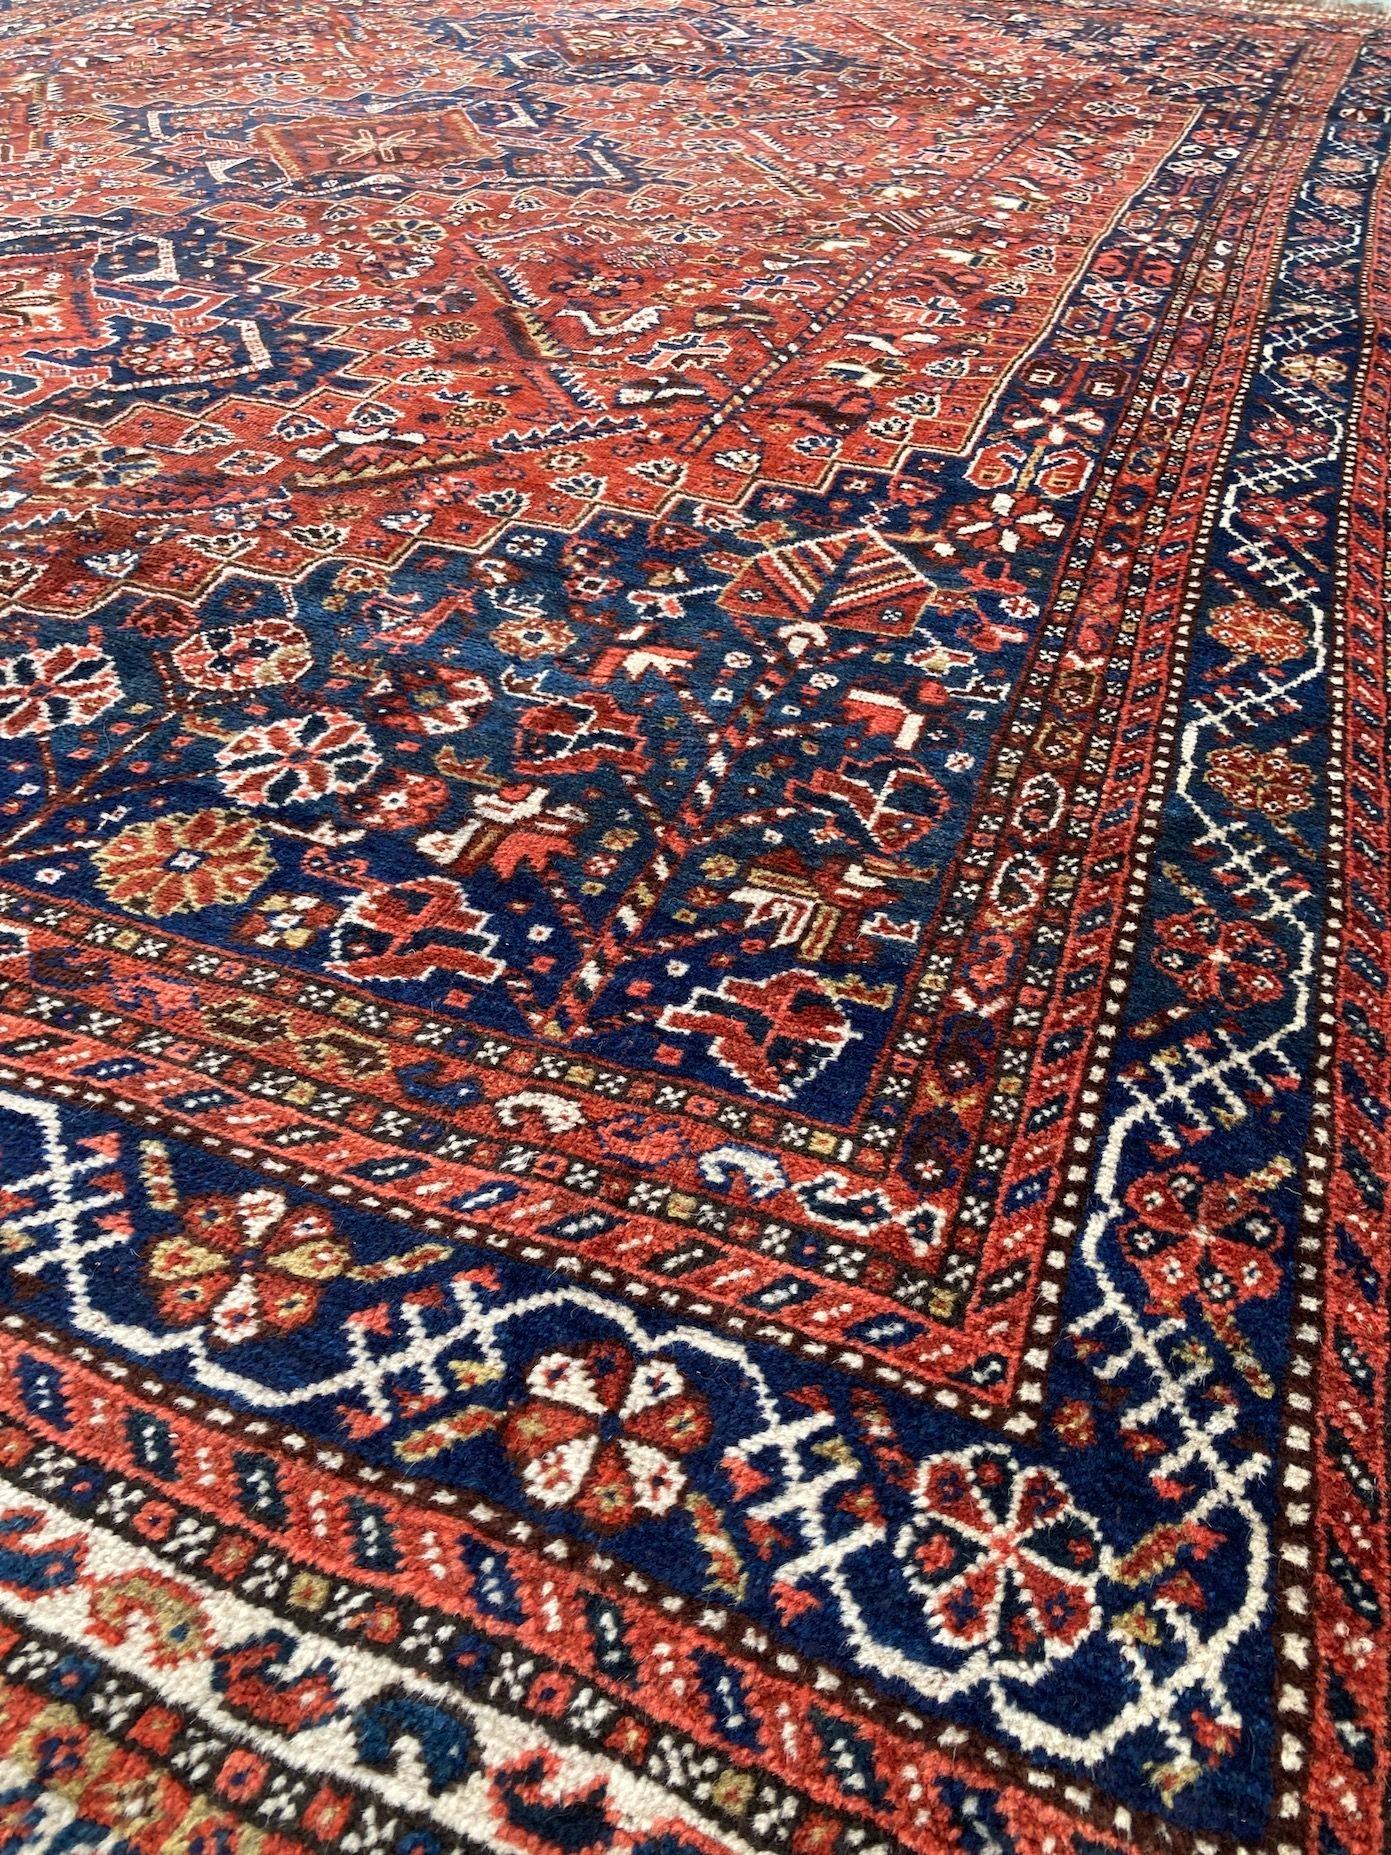 Antique Qashqai Carpet 3.35m x 2.35m For Sale 4